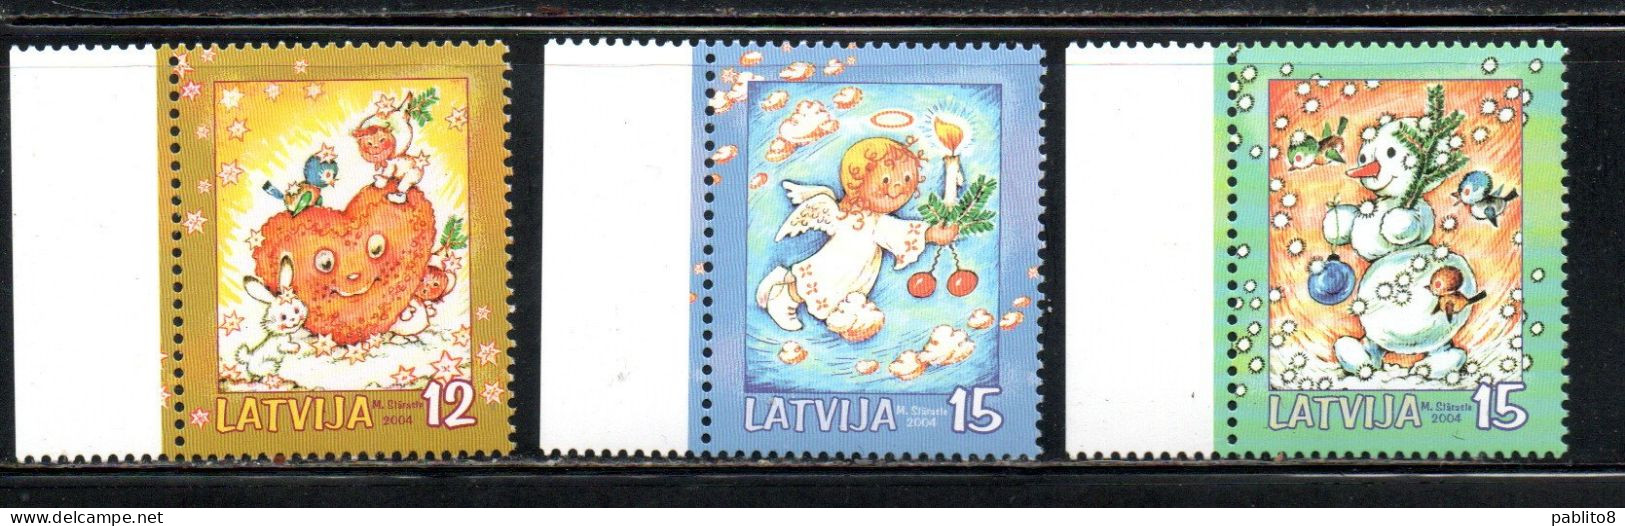 LATVIA LETTLAND LETTONIA LATVIJA 2004 CHRISTMAS NATALE NOEL WEIHNACHTEN NAVIDAD COMPLETE SET SERIE COMPLETA MNH - Lettonia